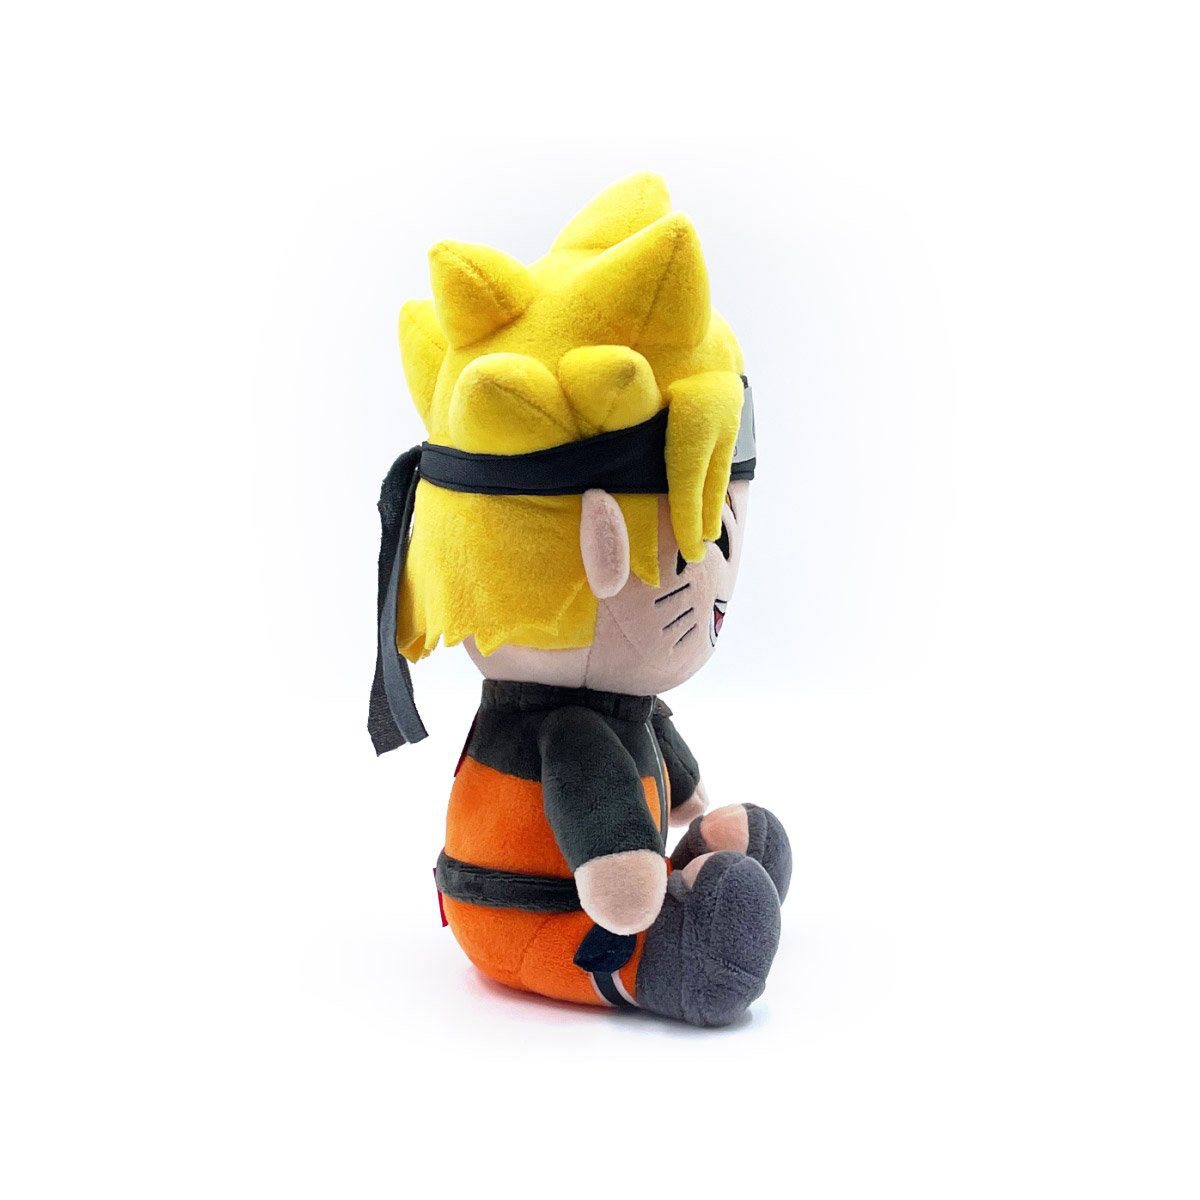  Youtooz Naruto Plush 9 Inch, Collectible Uzumaki